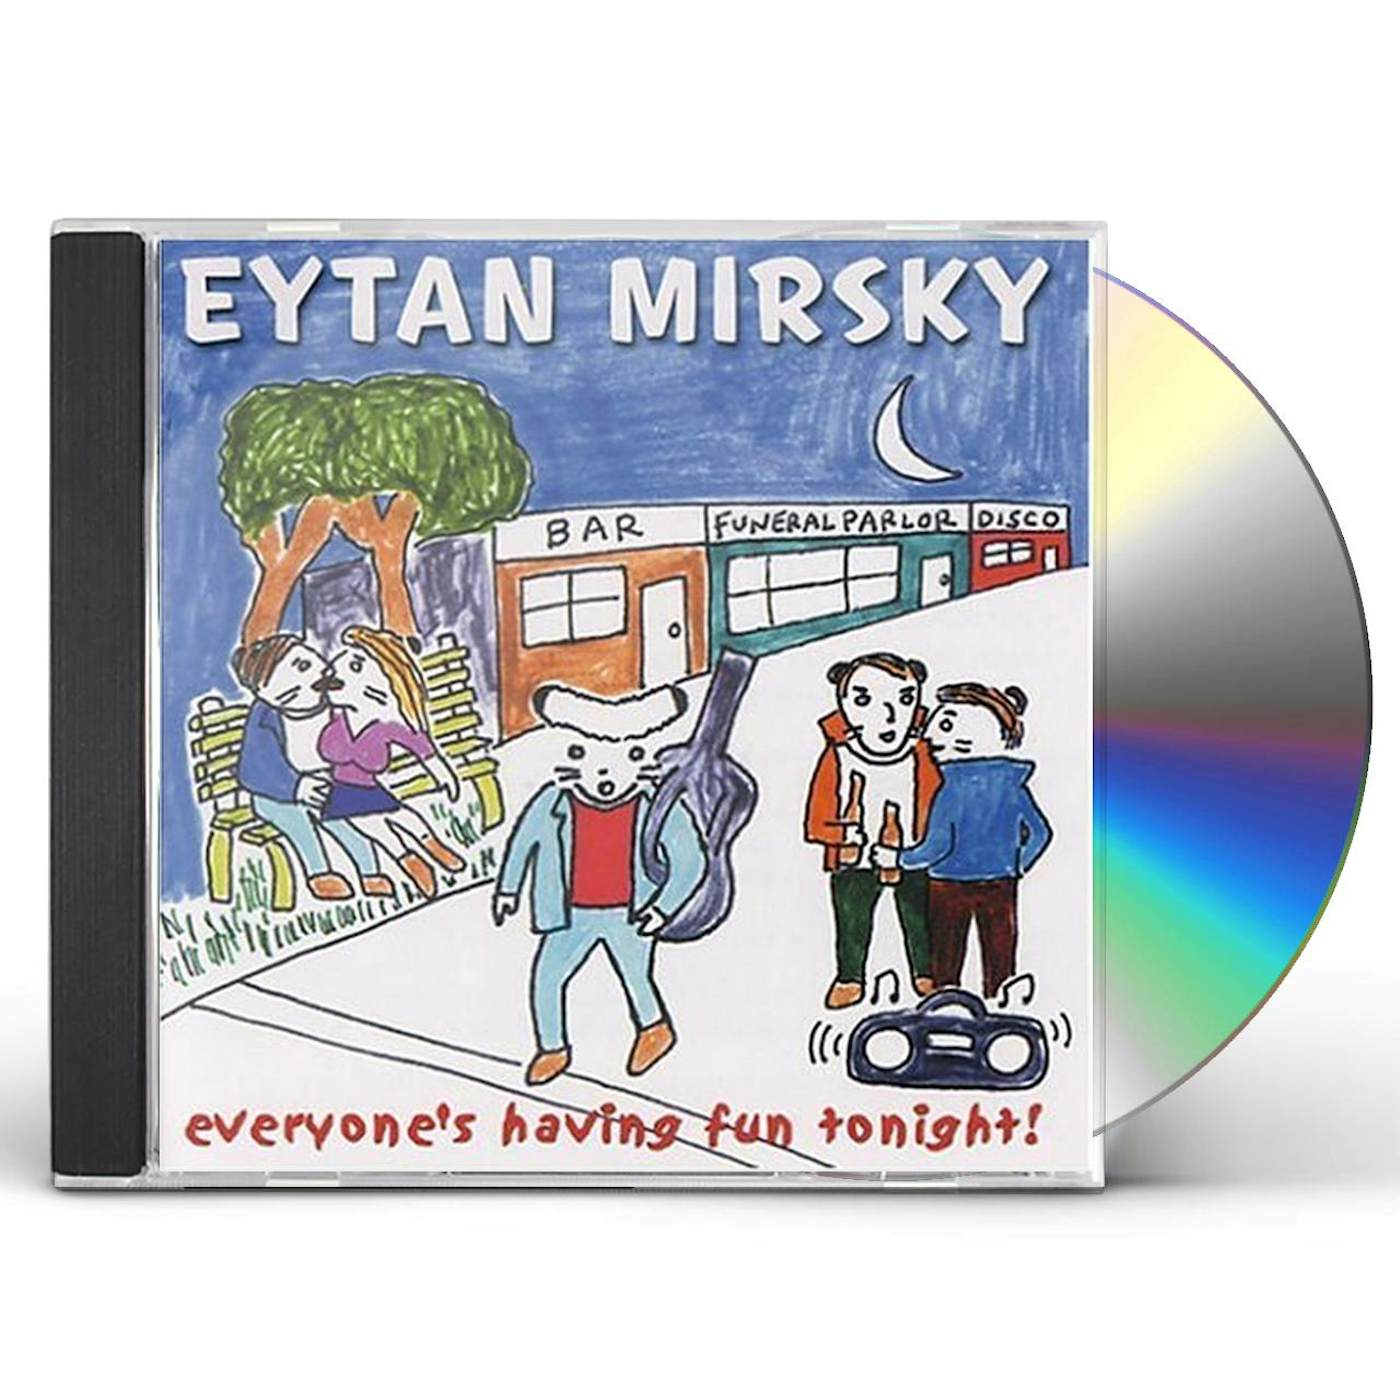 Eytan Mirsky EVERYONES HAVING FUN TONIGHT! CD